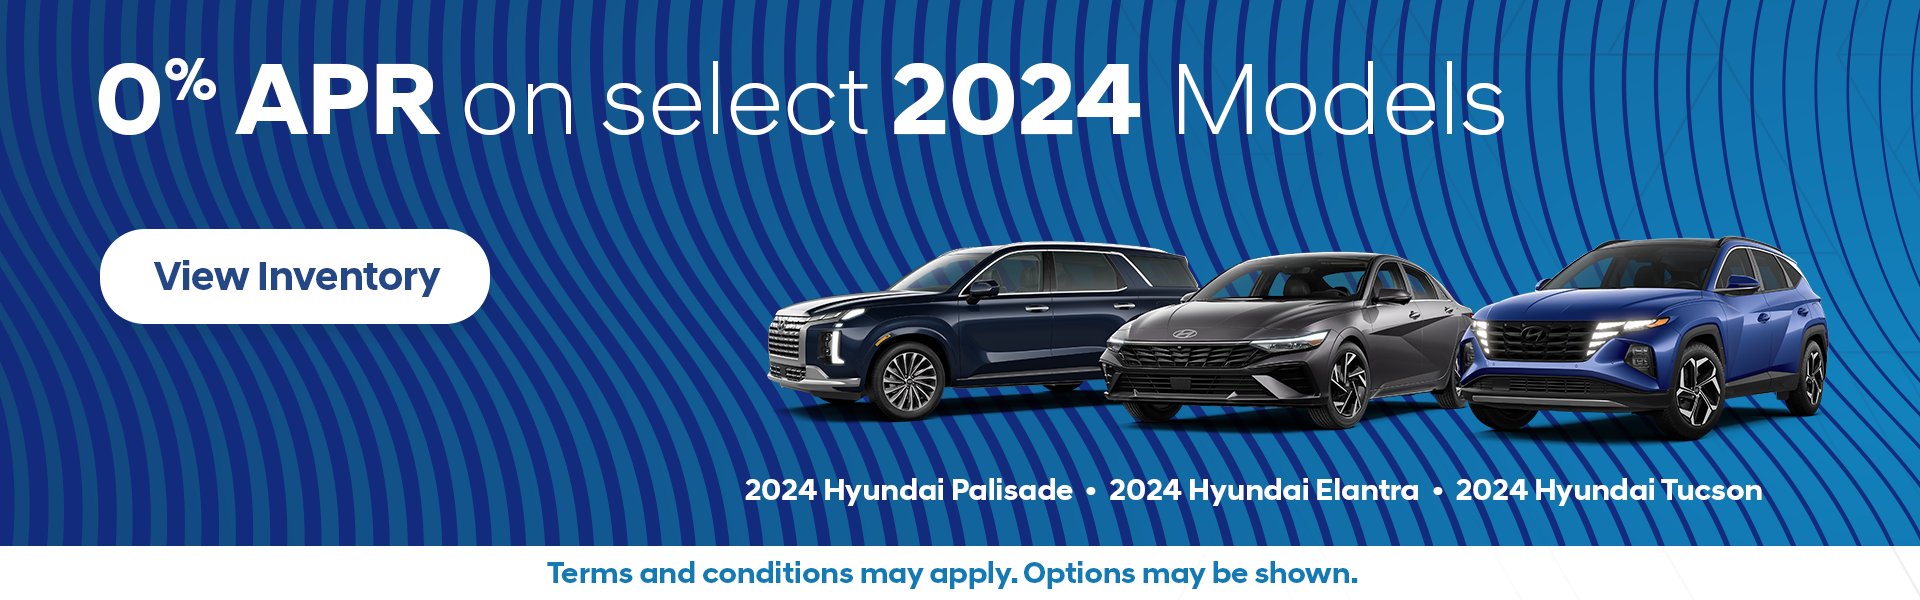 Select 2024 Models